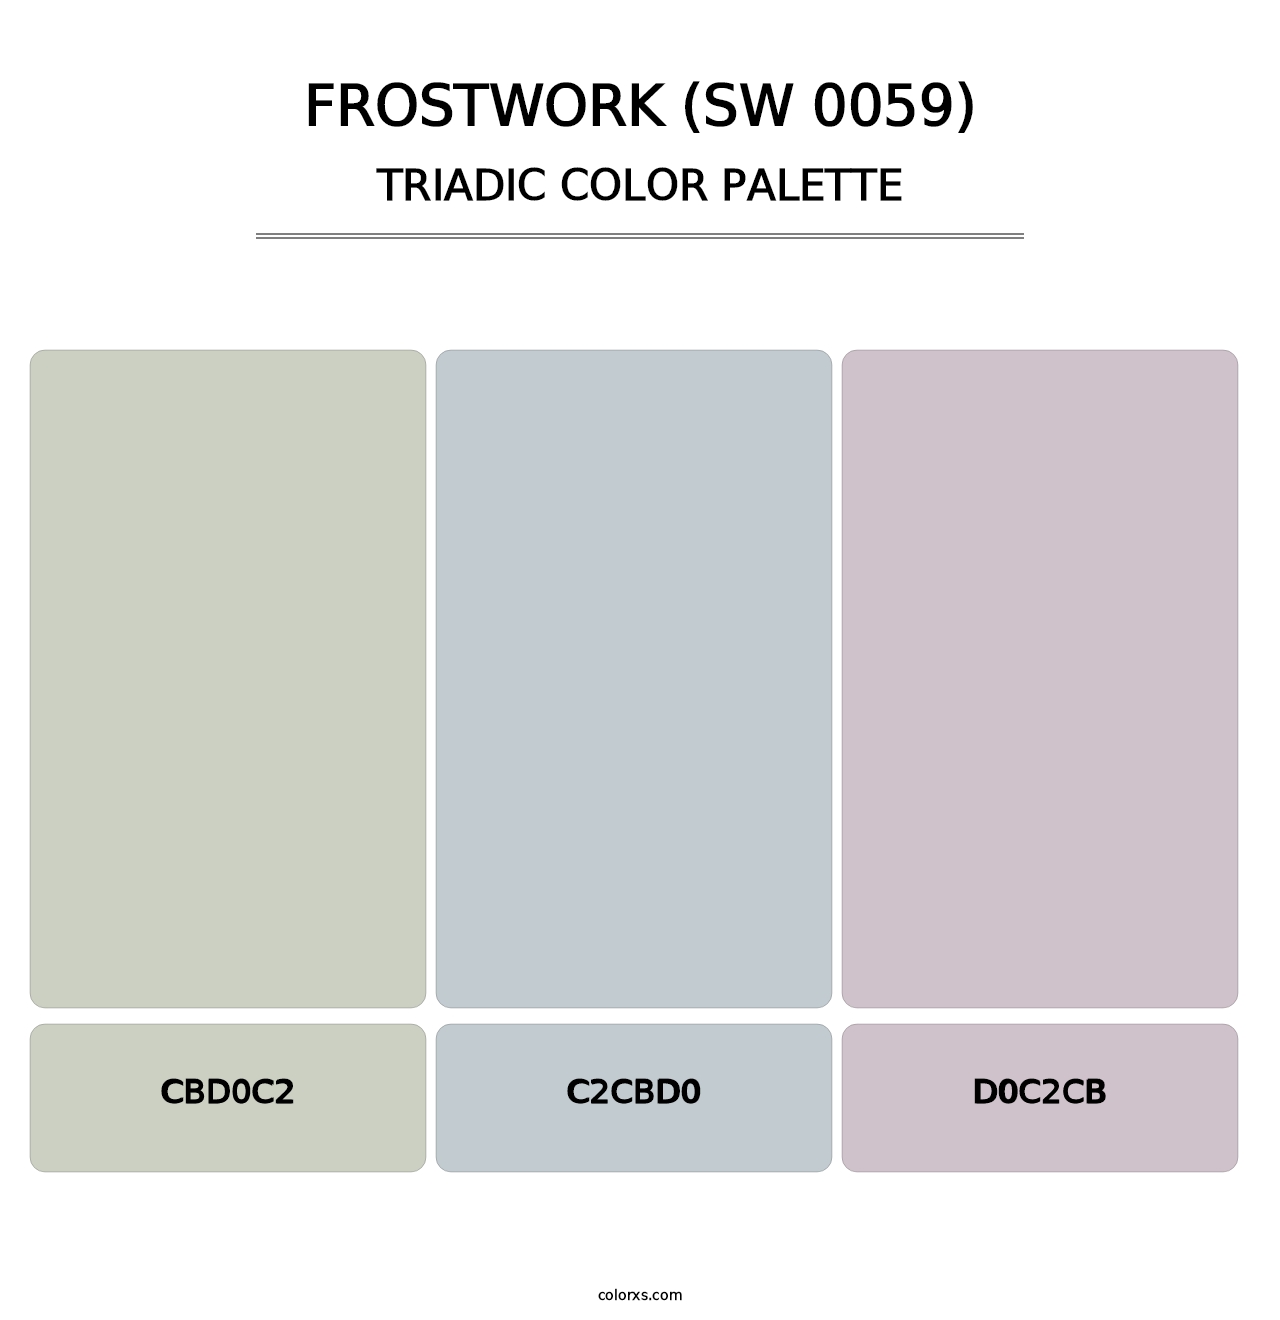 Frostwork (SW 0059) - Triadic Color Palette